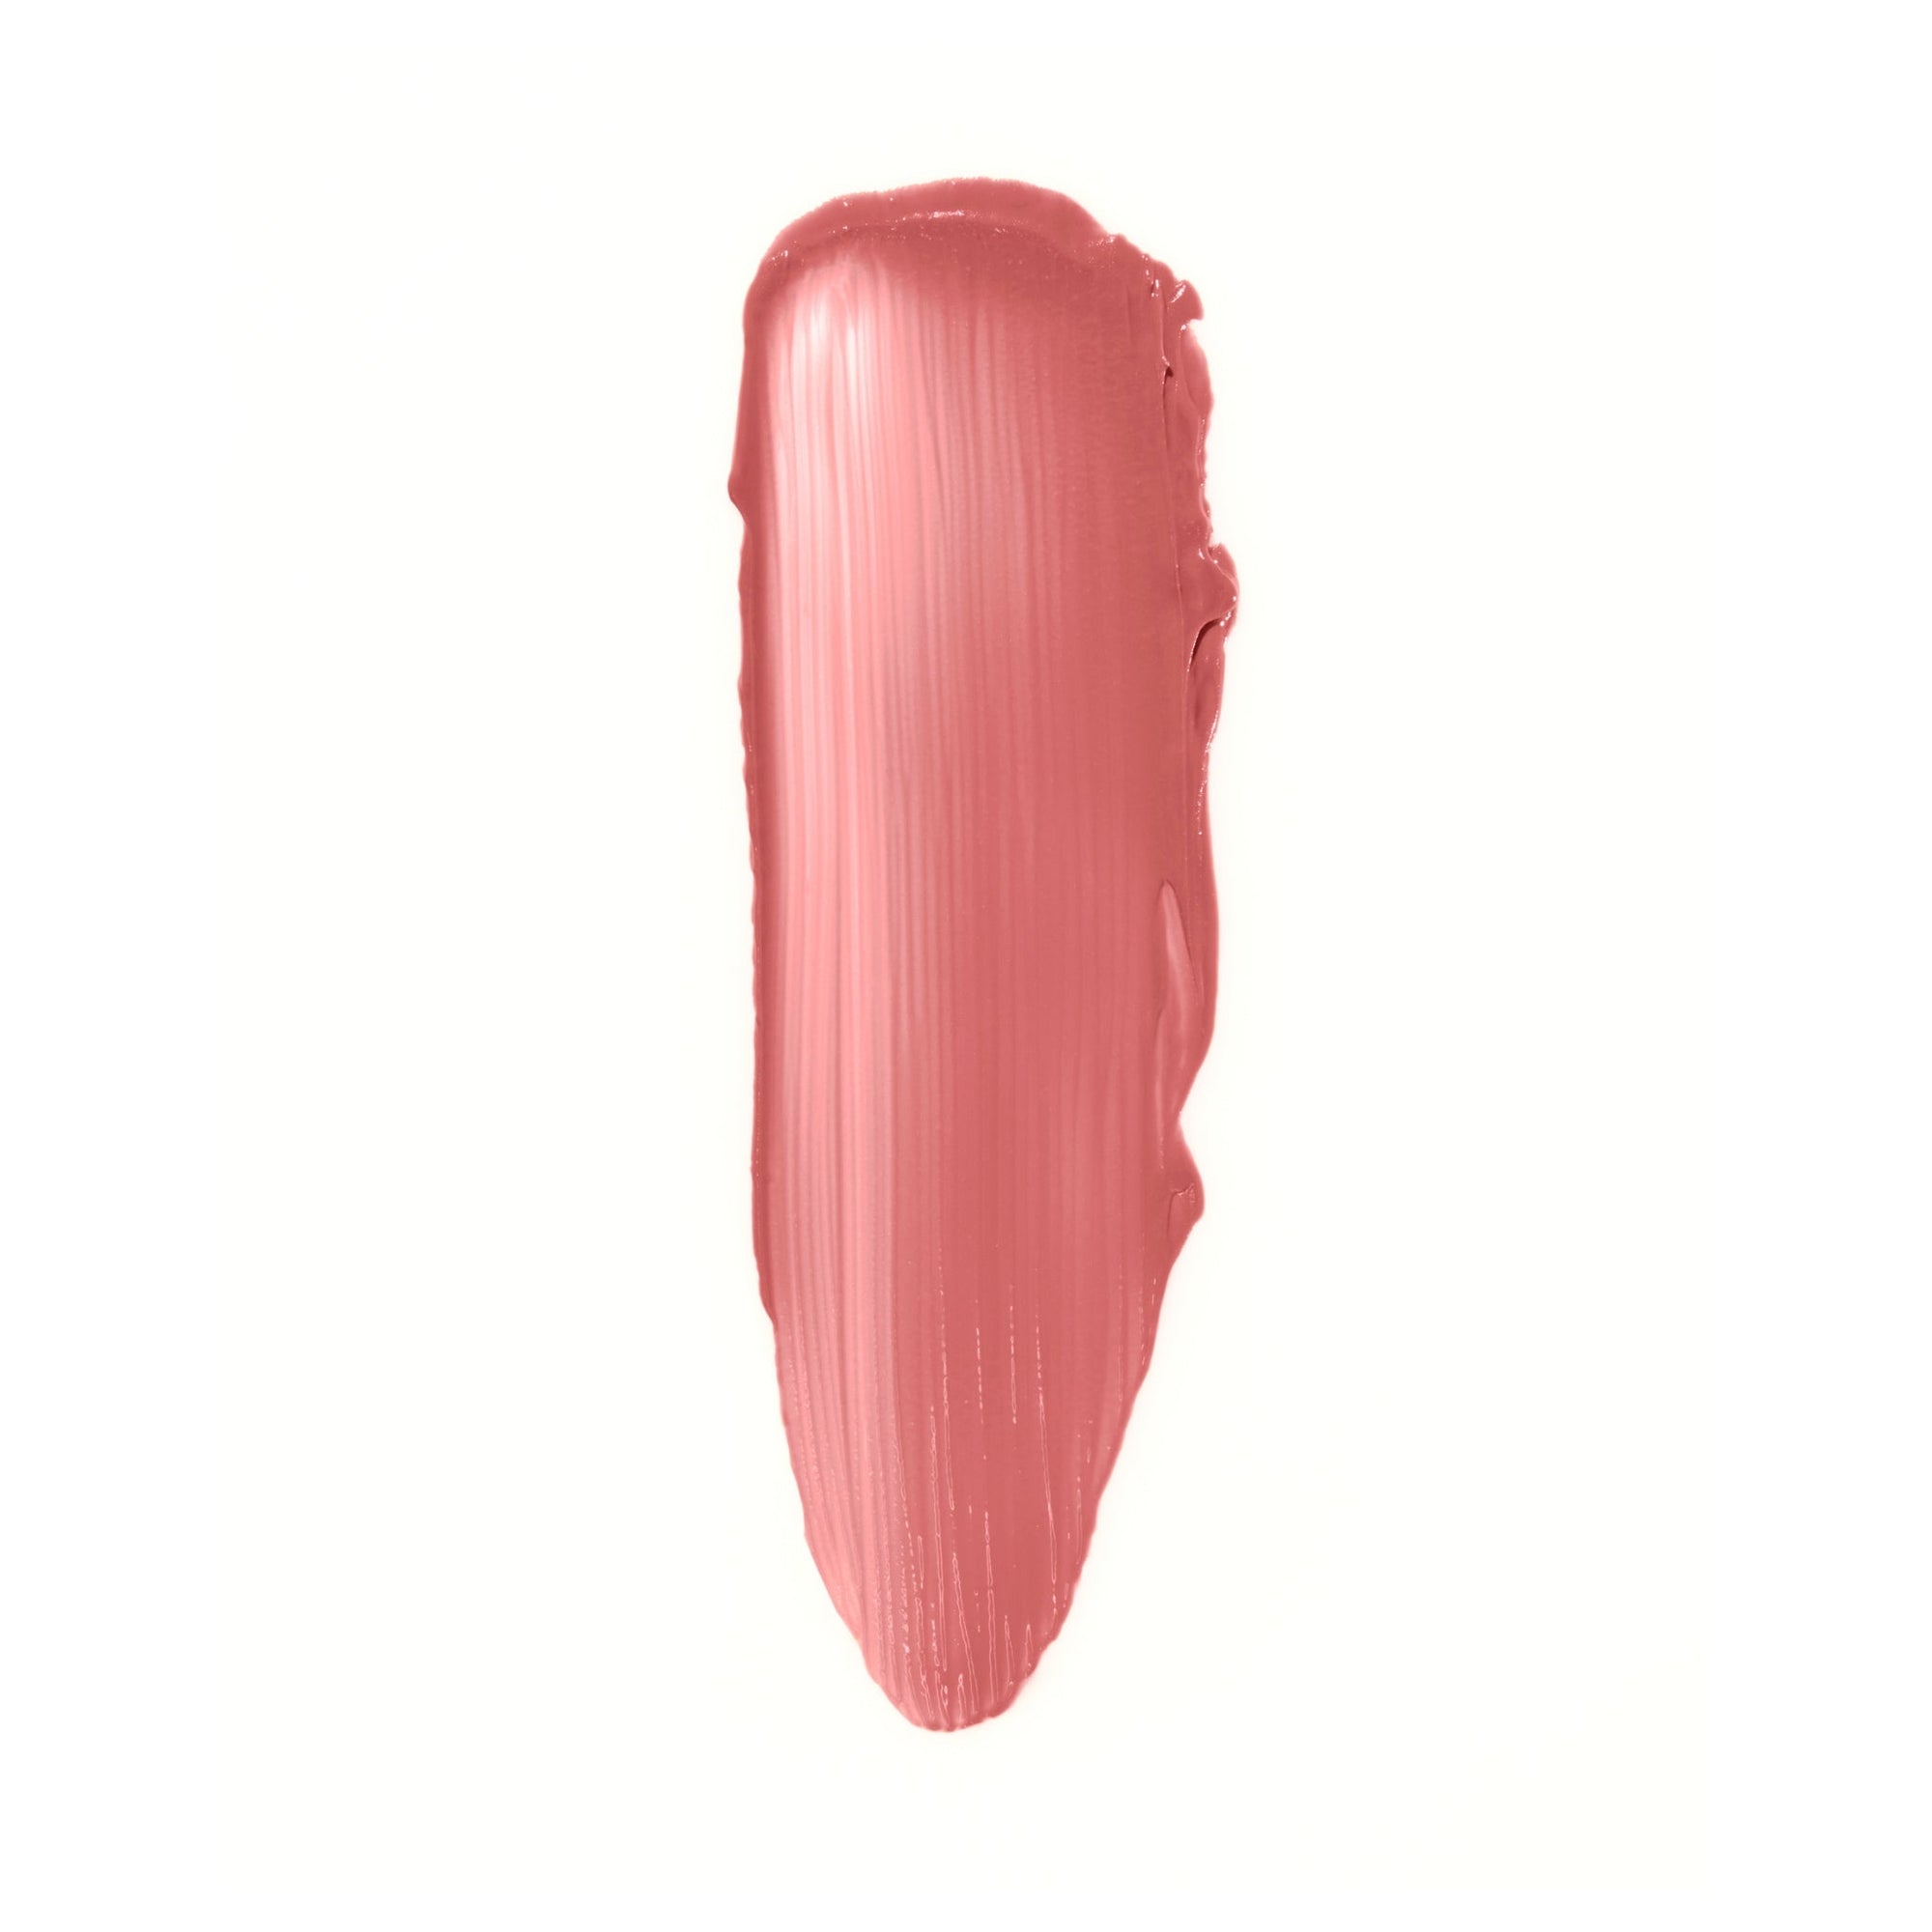 Wonderblush - Wonderblush Le Baume Tinted Lip Balm - ORESTA clean beauty simplified